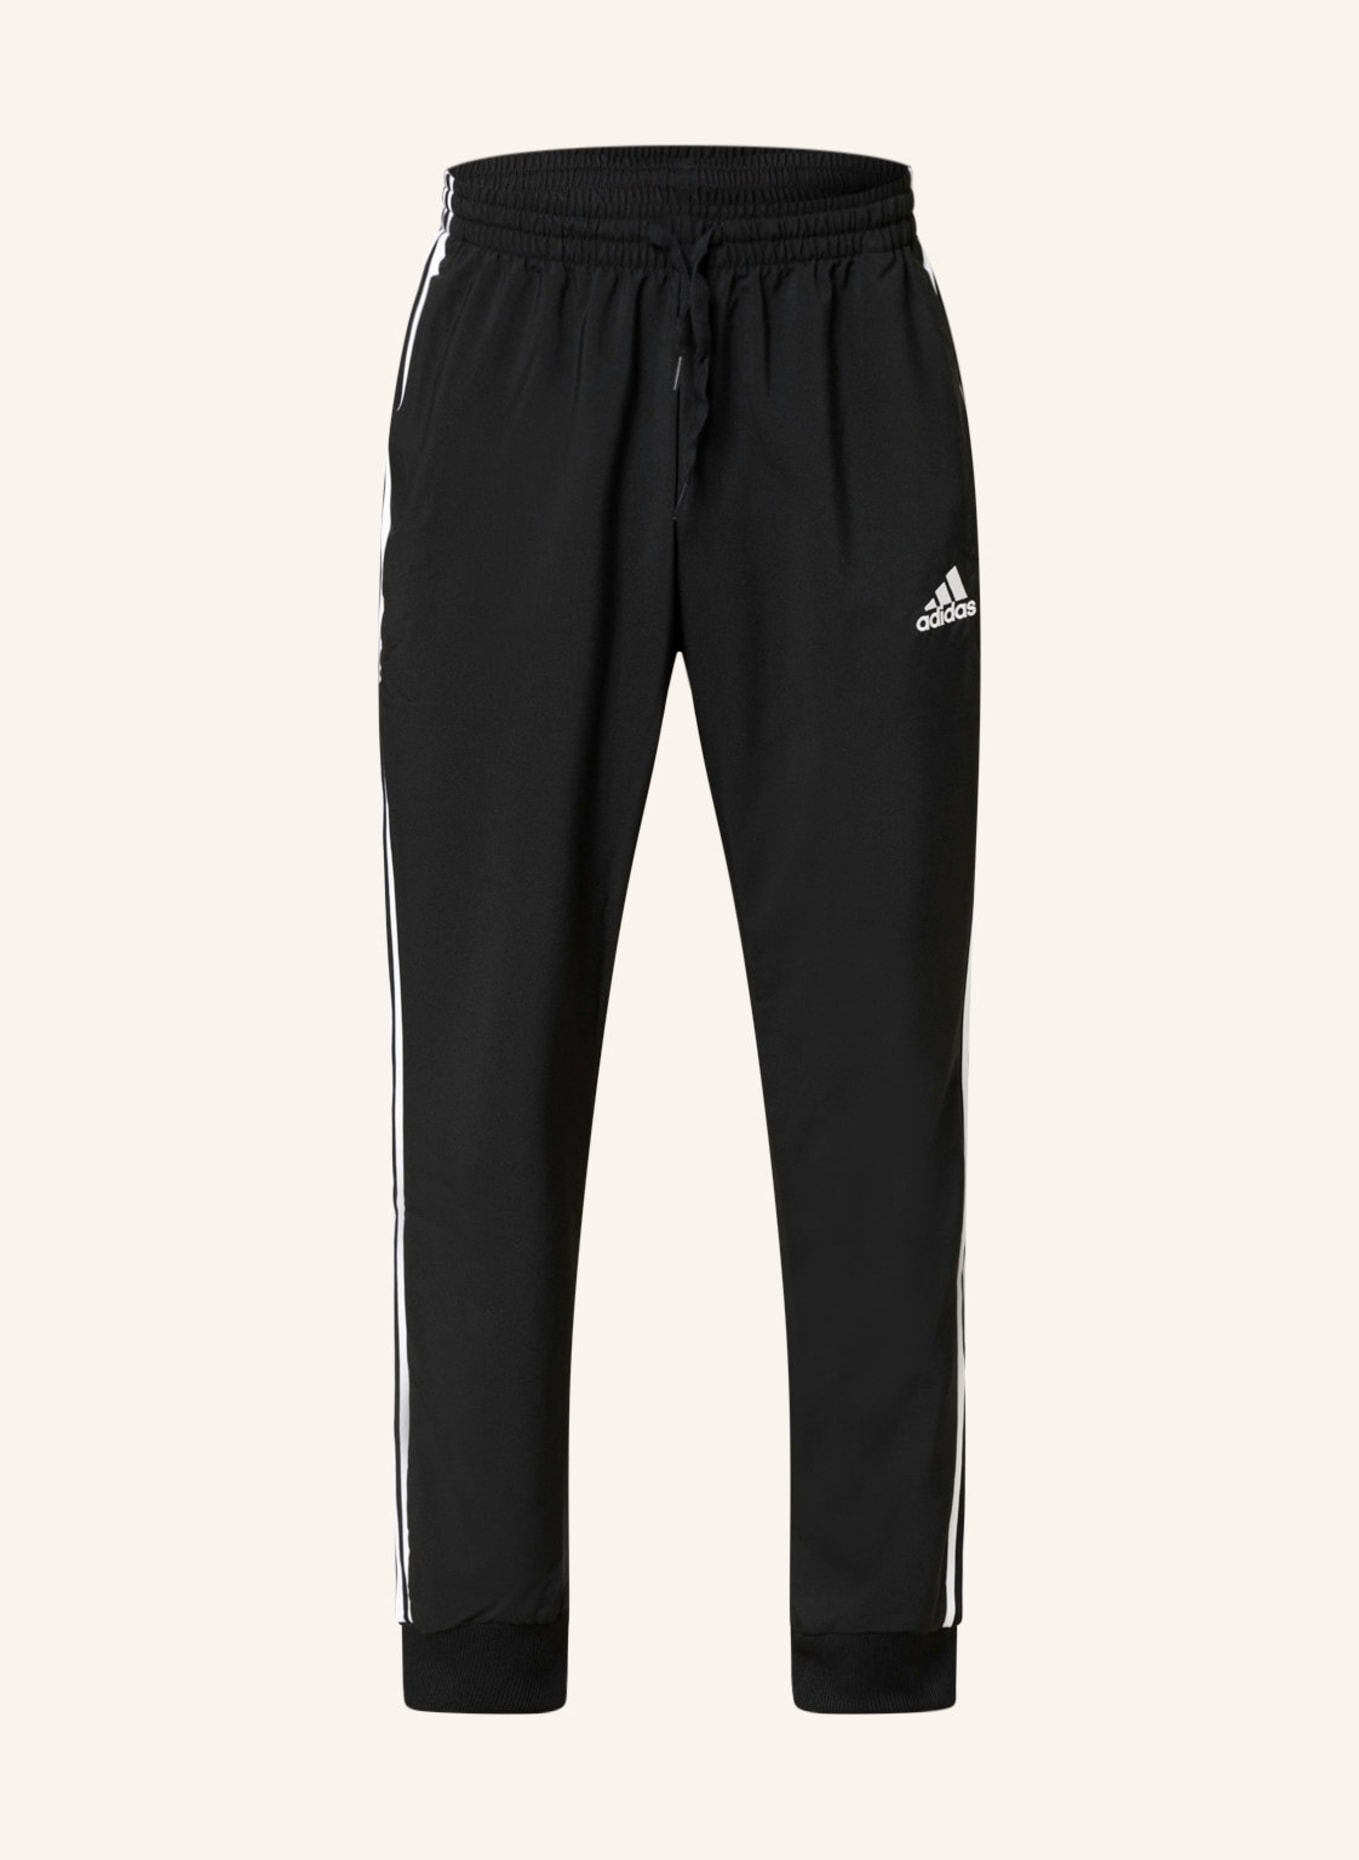 adidas Women's Training Wrapped 3-Stripes Snap Pants (Plus Size) - Black  adidas US